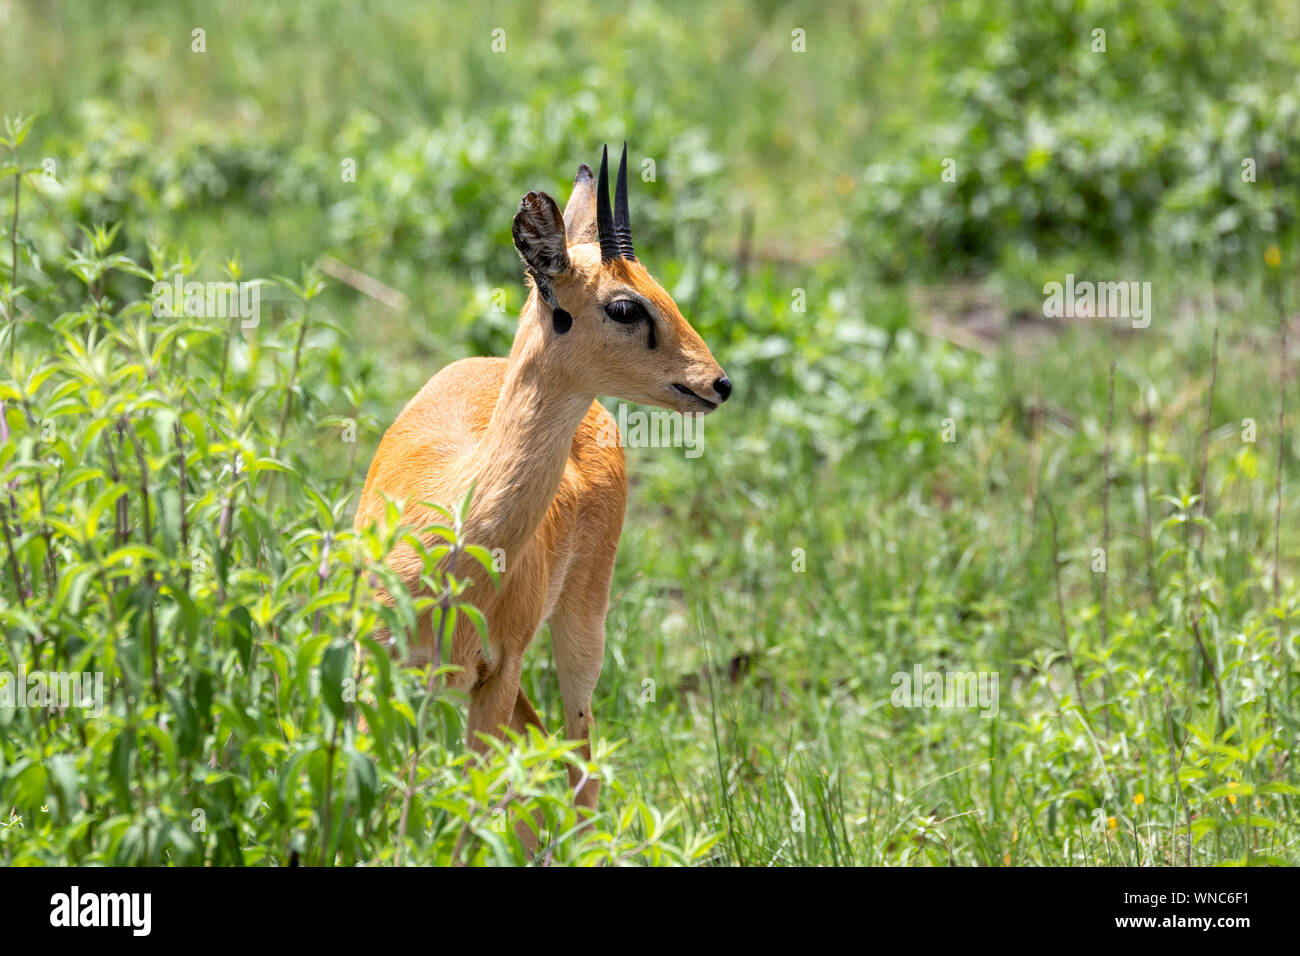 Oribi, Ourebia ourebi is small antelope found in eastern, southern and western Africa. Ethiopia, Senkelle Sanctuary, Africa wildlife Stock Photo